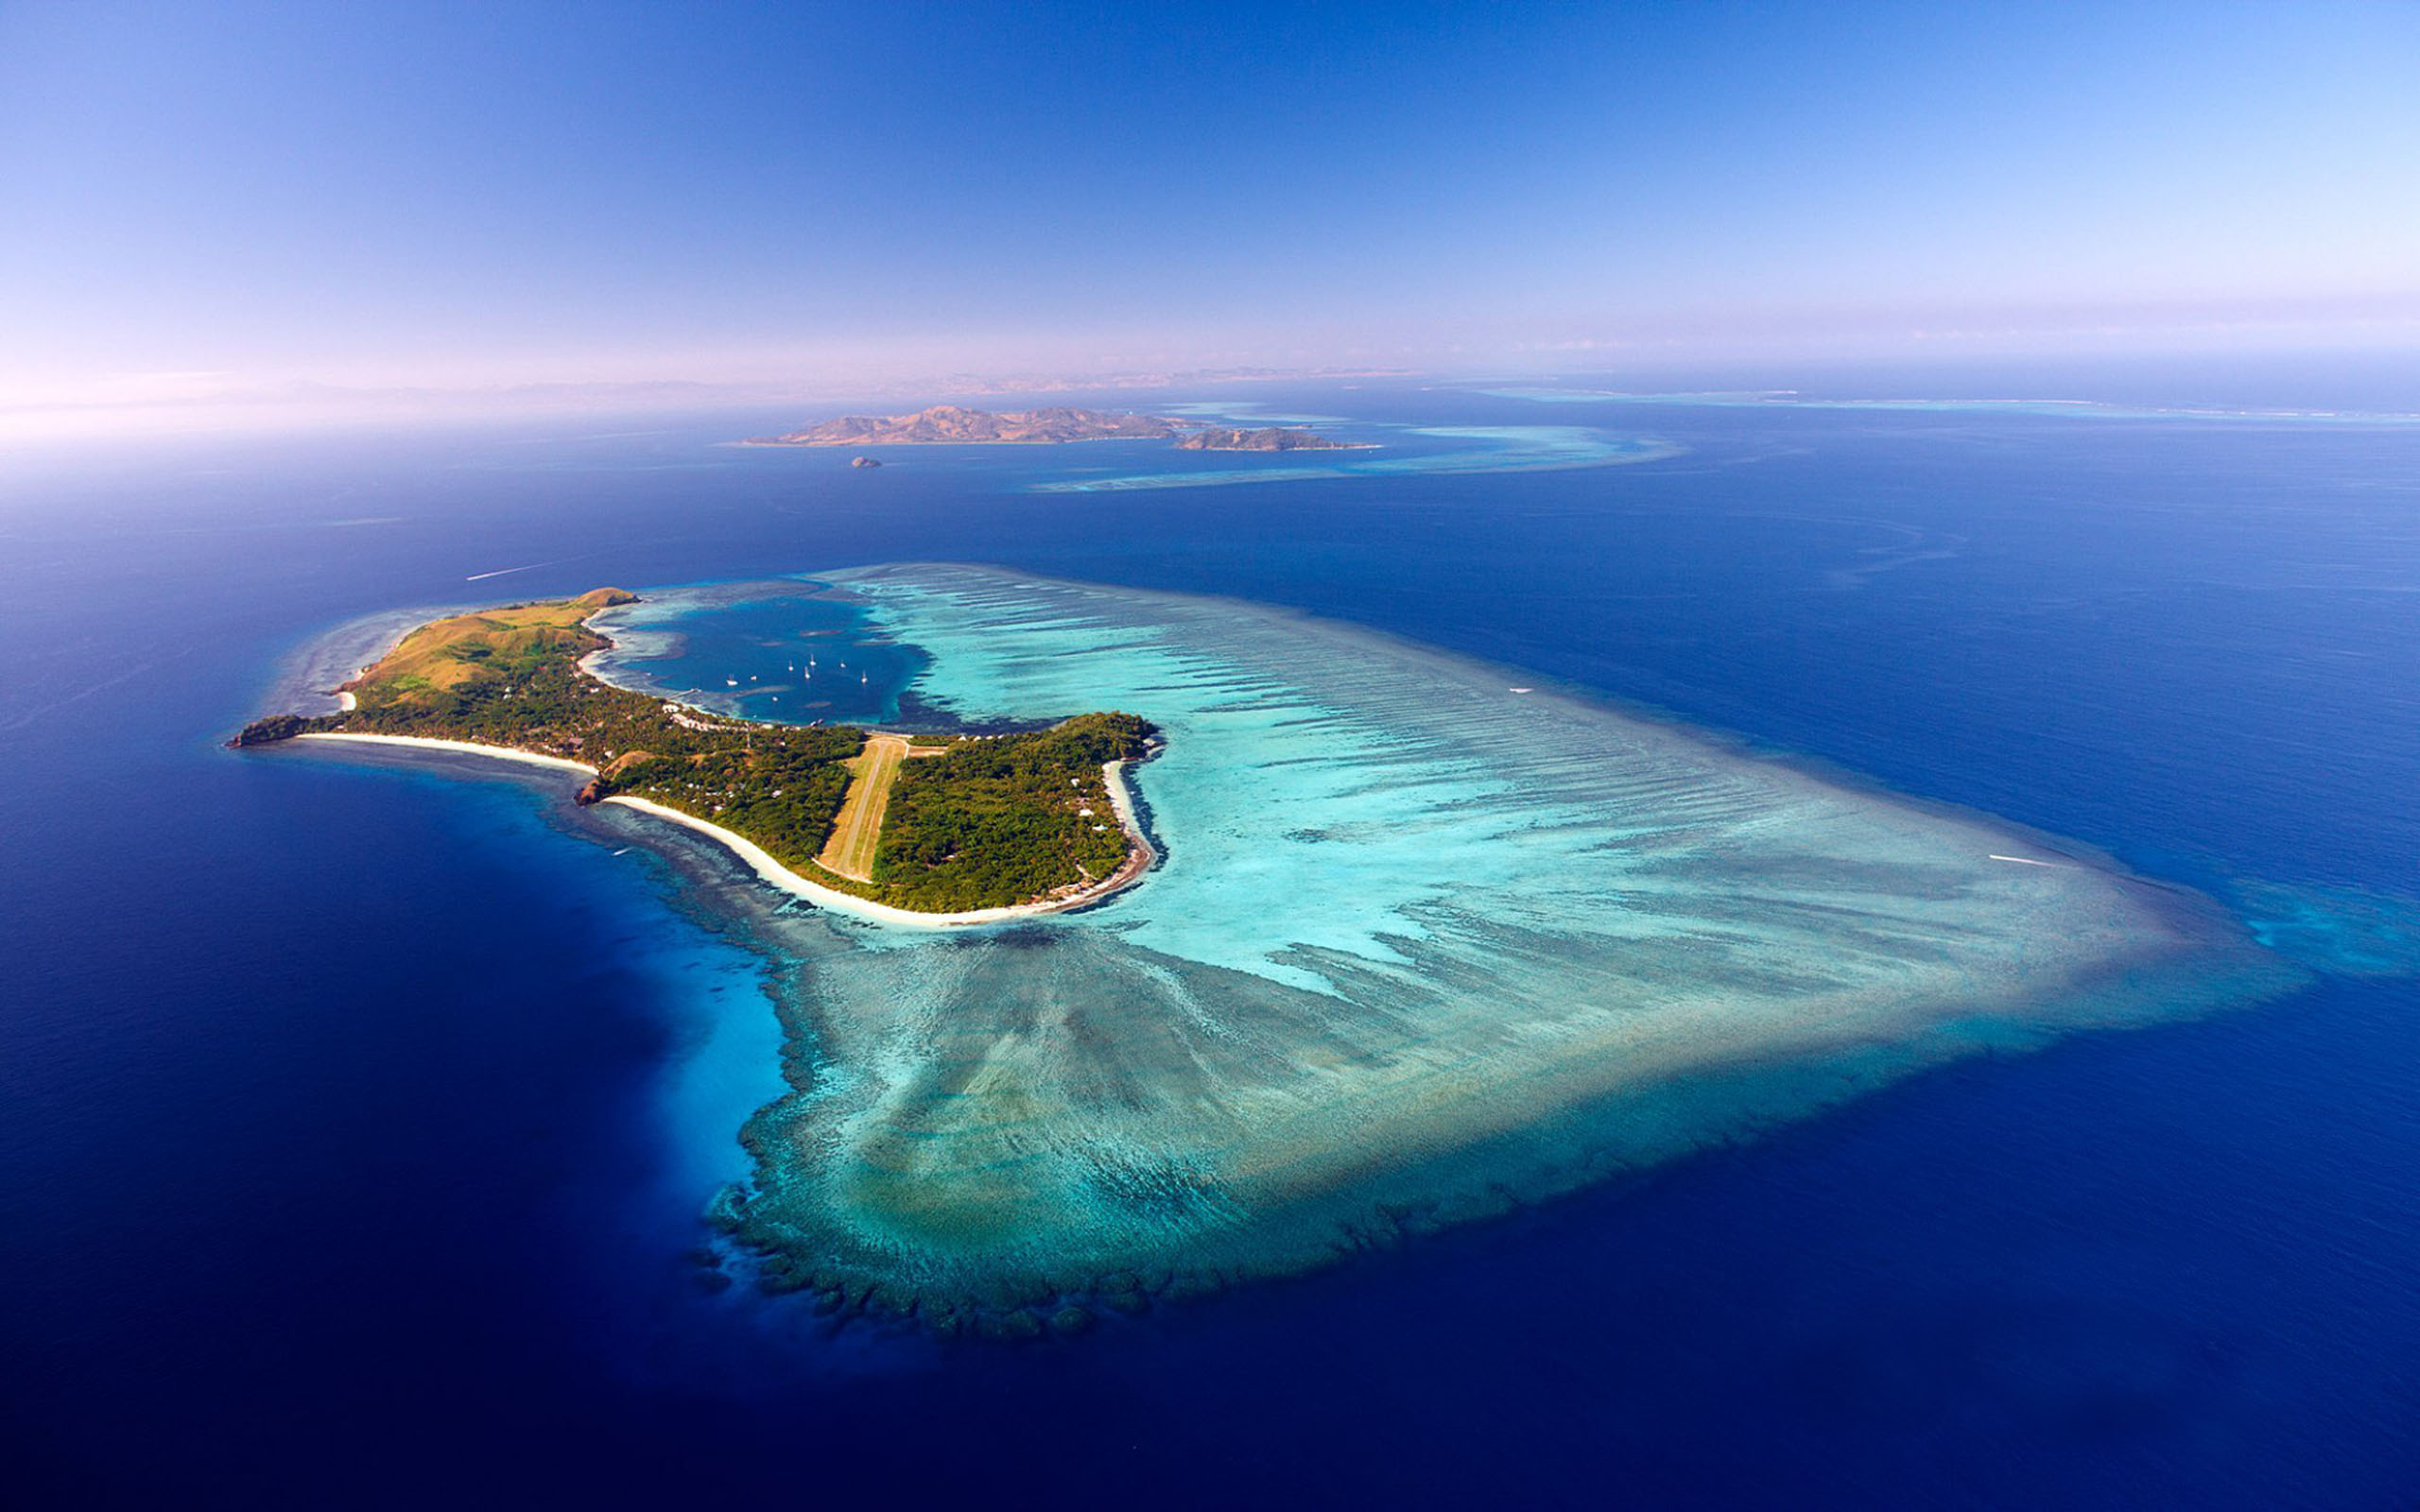 Люди на островах тихого океана. Фиджи Маманука. Архипелаг Фиджи. Океания Фиджи. Остров Макати Фиджи.